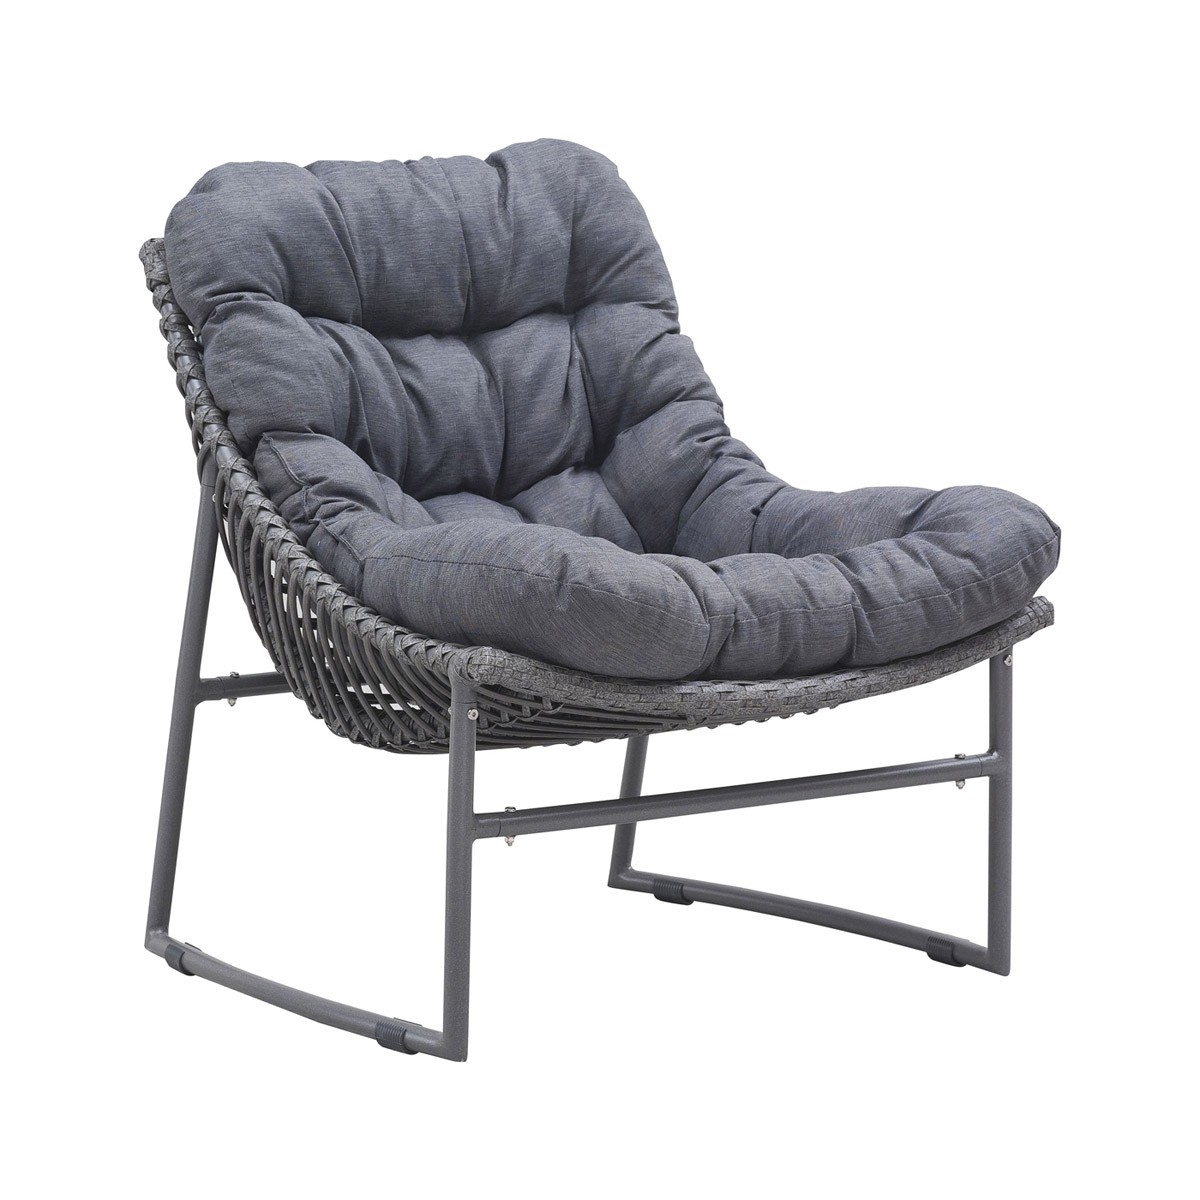 Zuo Modern Ingonish Beach Chair - Grey